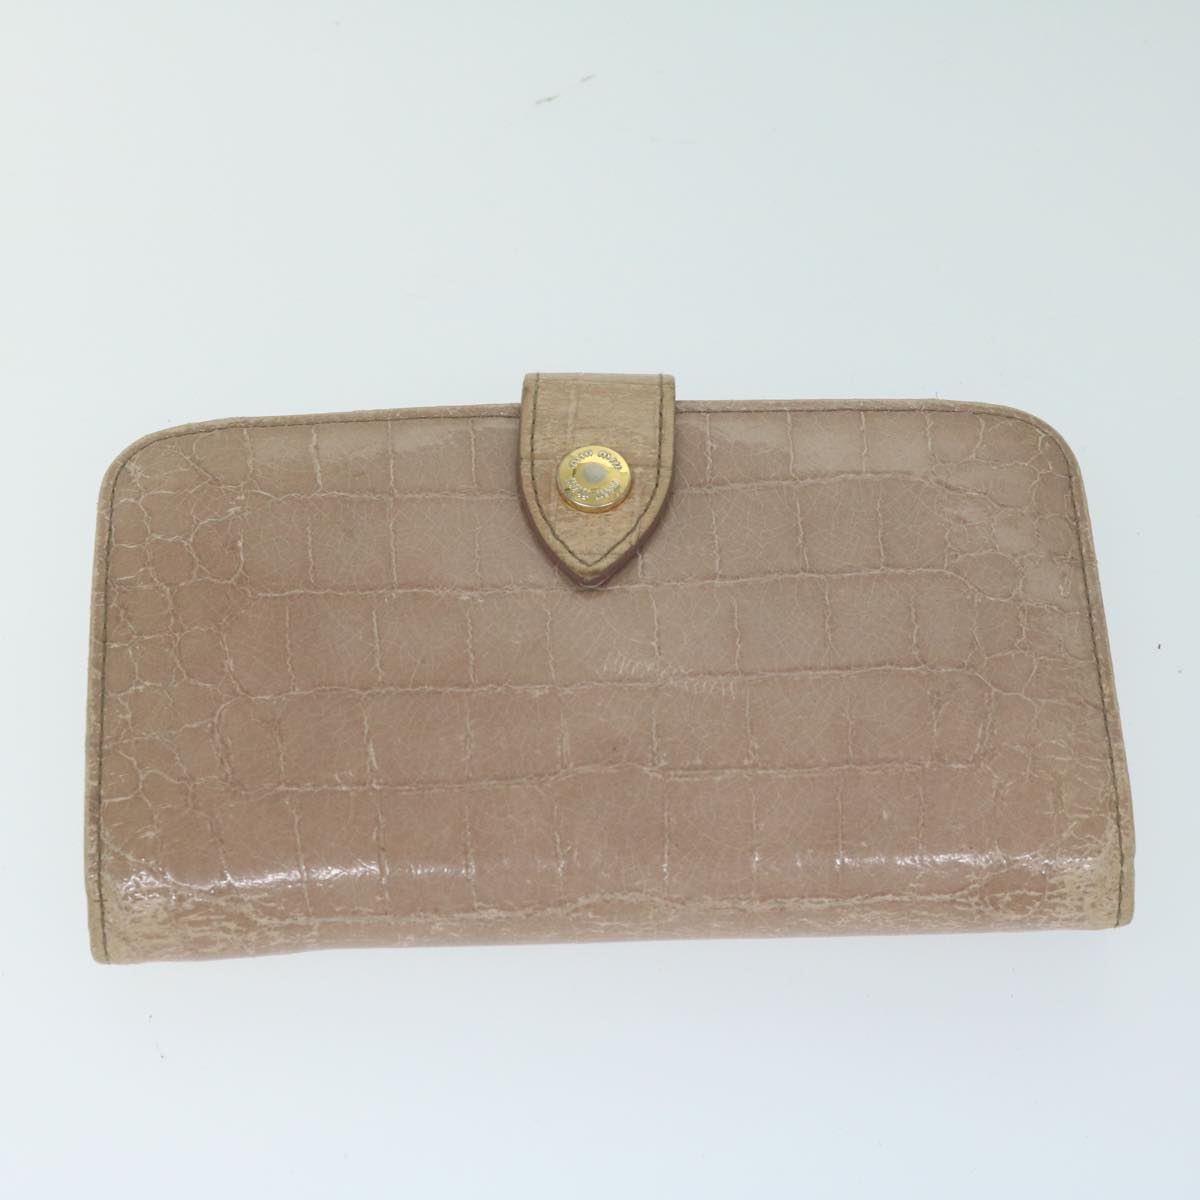 Miu Miu Wallet Leather 6Set Pink Yellow gray Auth bs11210